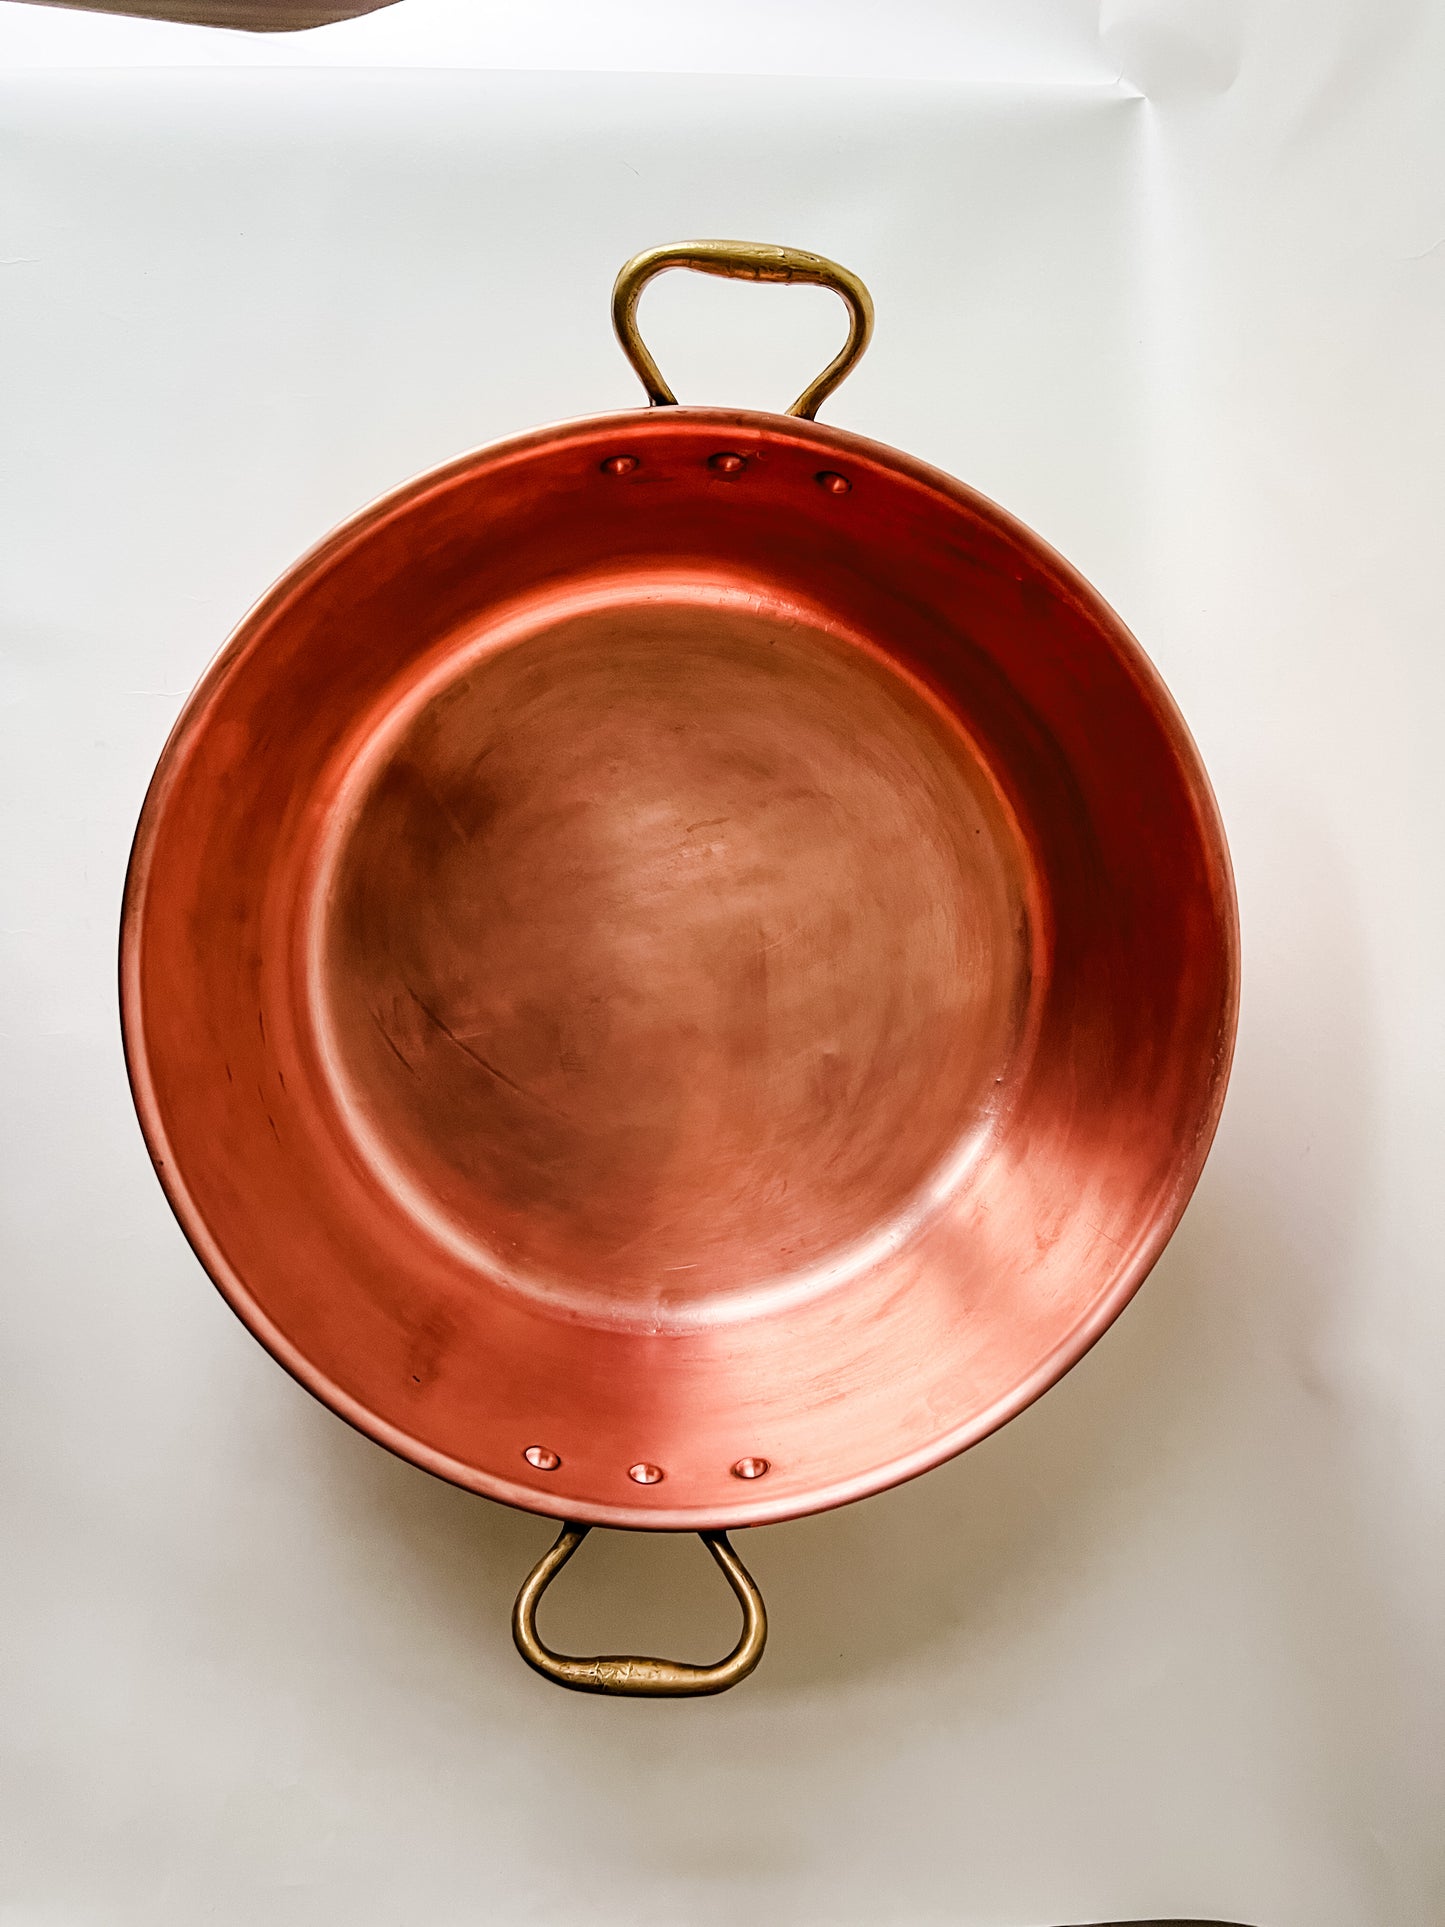 Large Vintage Copper Preserving Pan